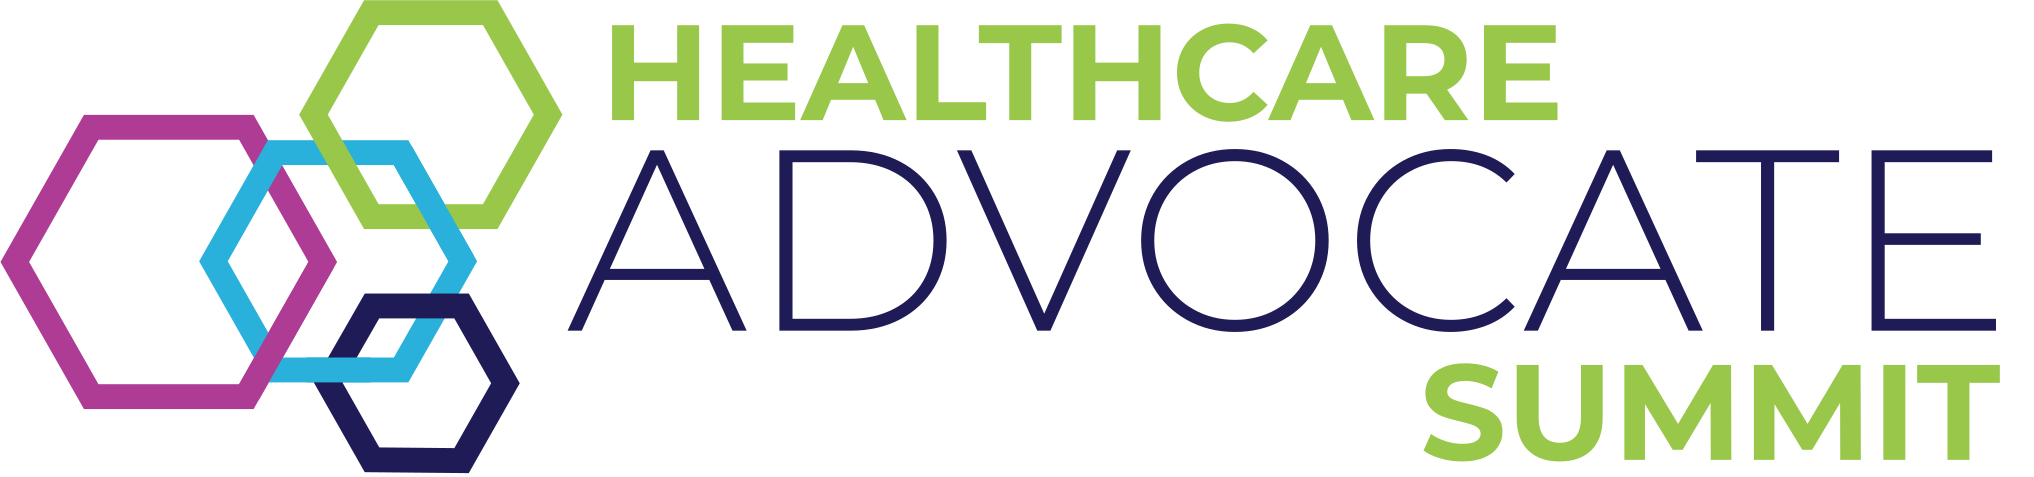 Healthcare Advocate Summit logo